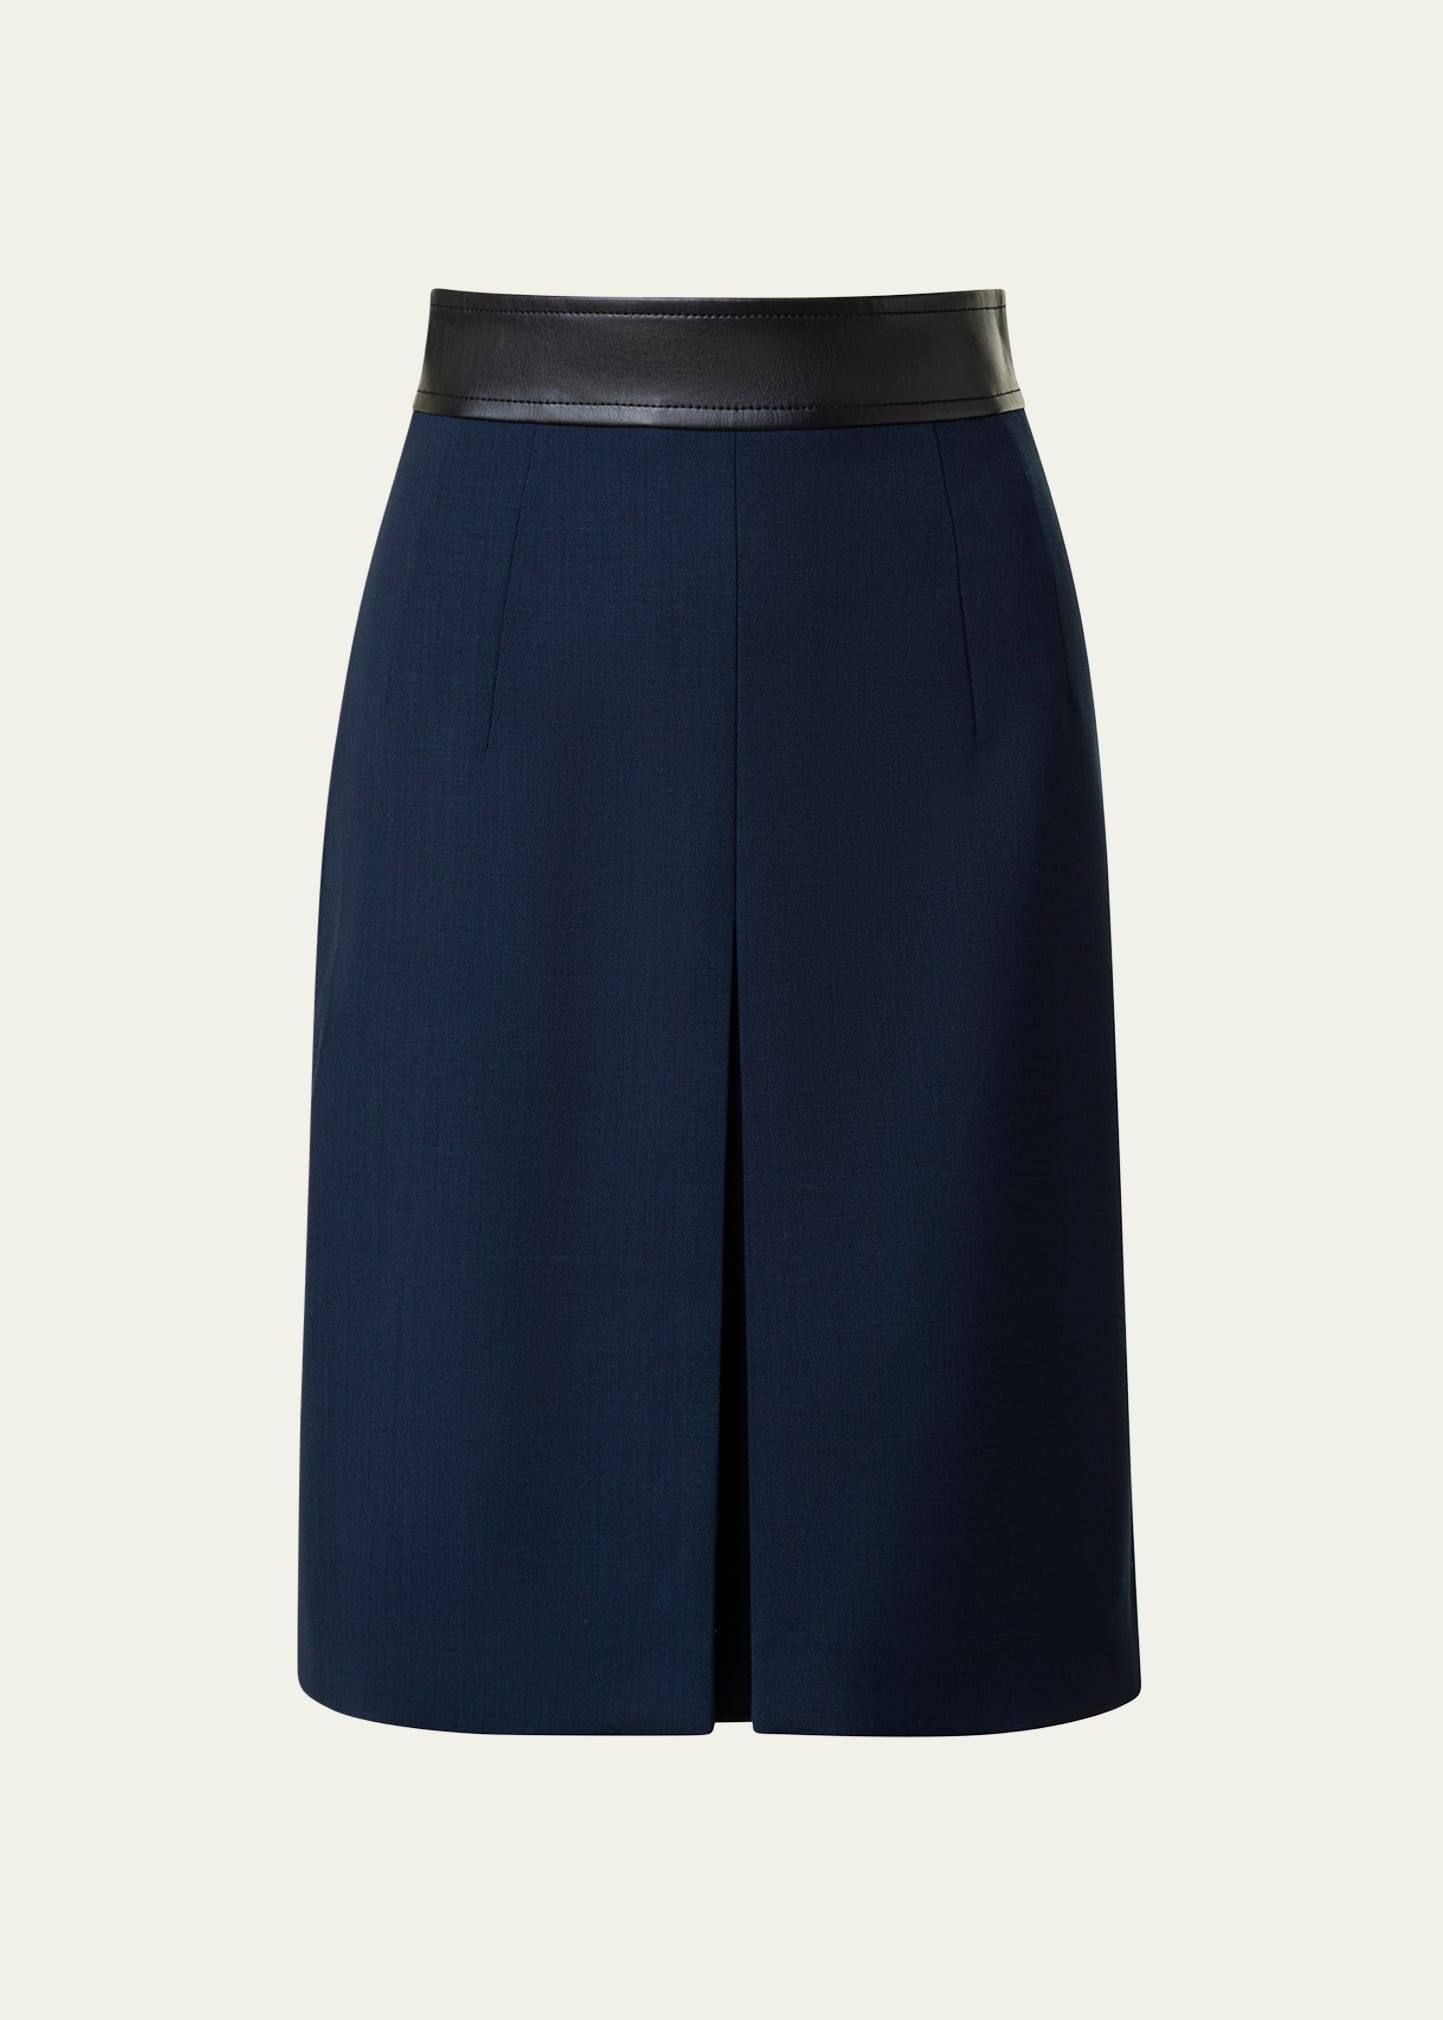 Pencil Skirt Mix Media Wool Crepe Vegan Leather Waistband Detail Front Box Pleat Back Zip Closure Knee Length